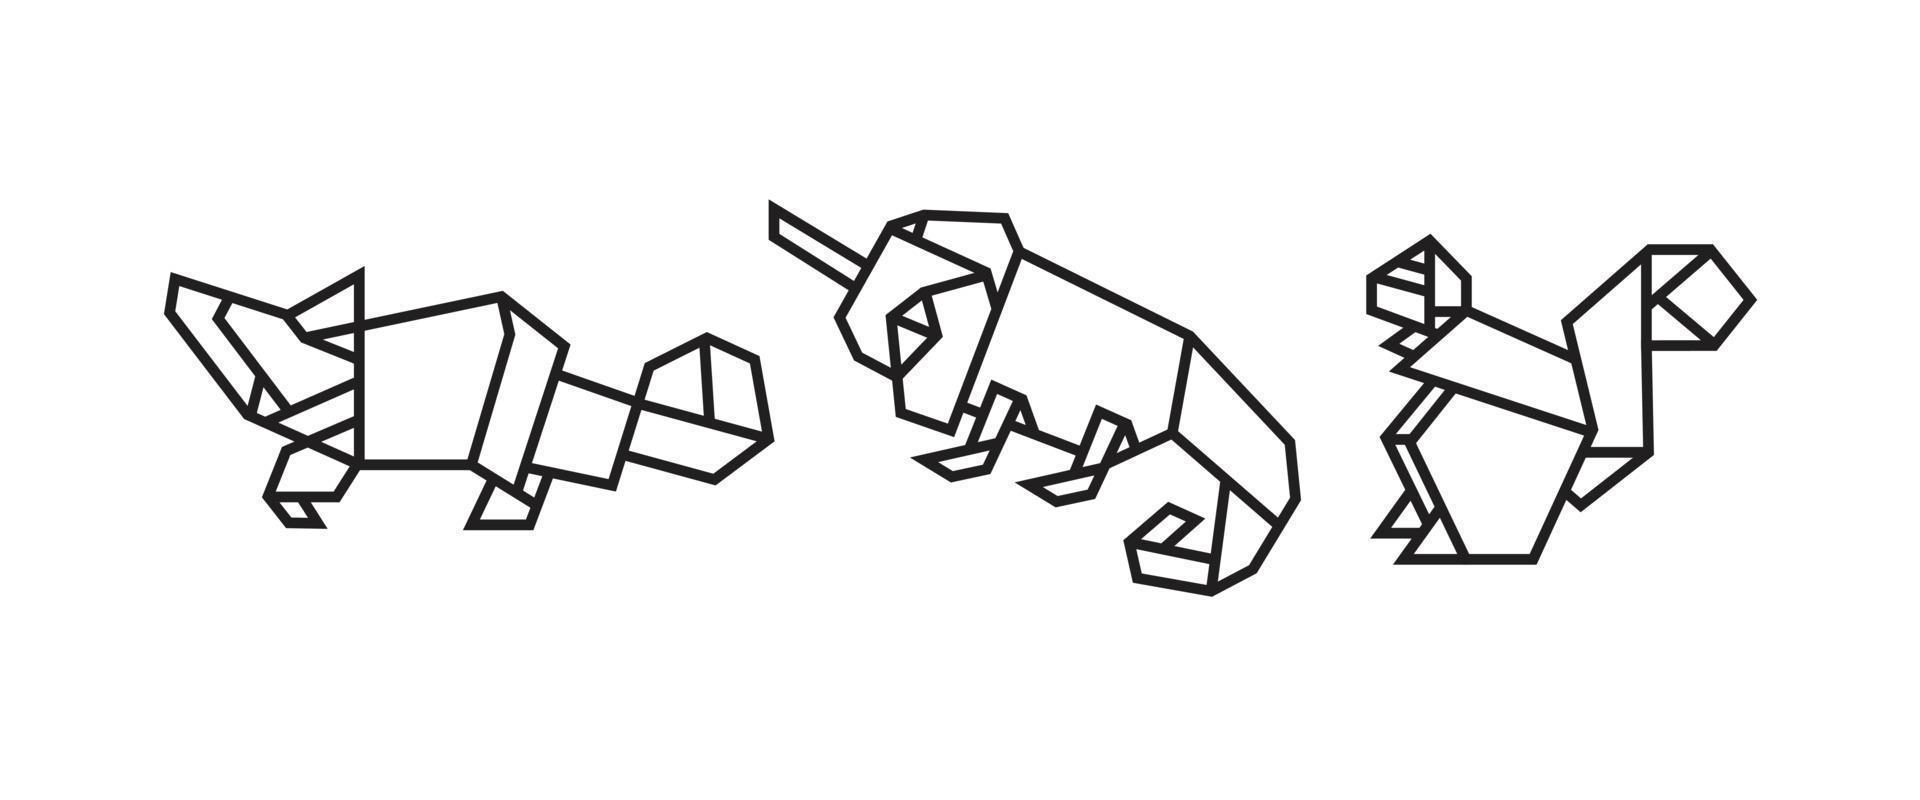 Mammalia illustrations in origami style vector